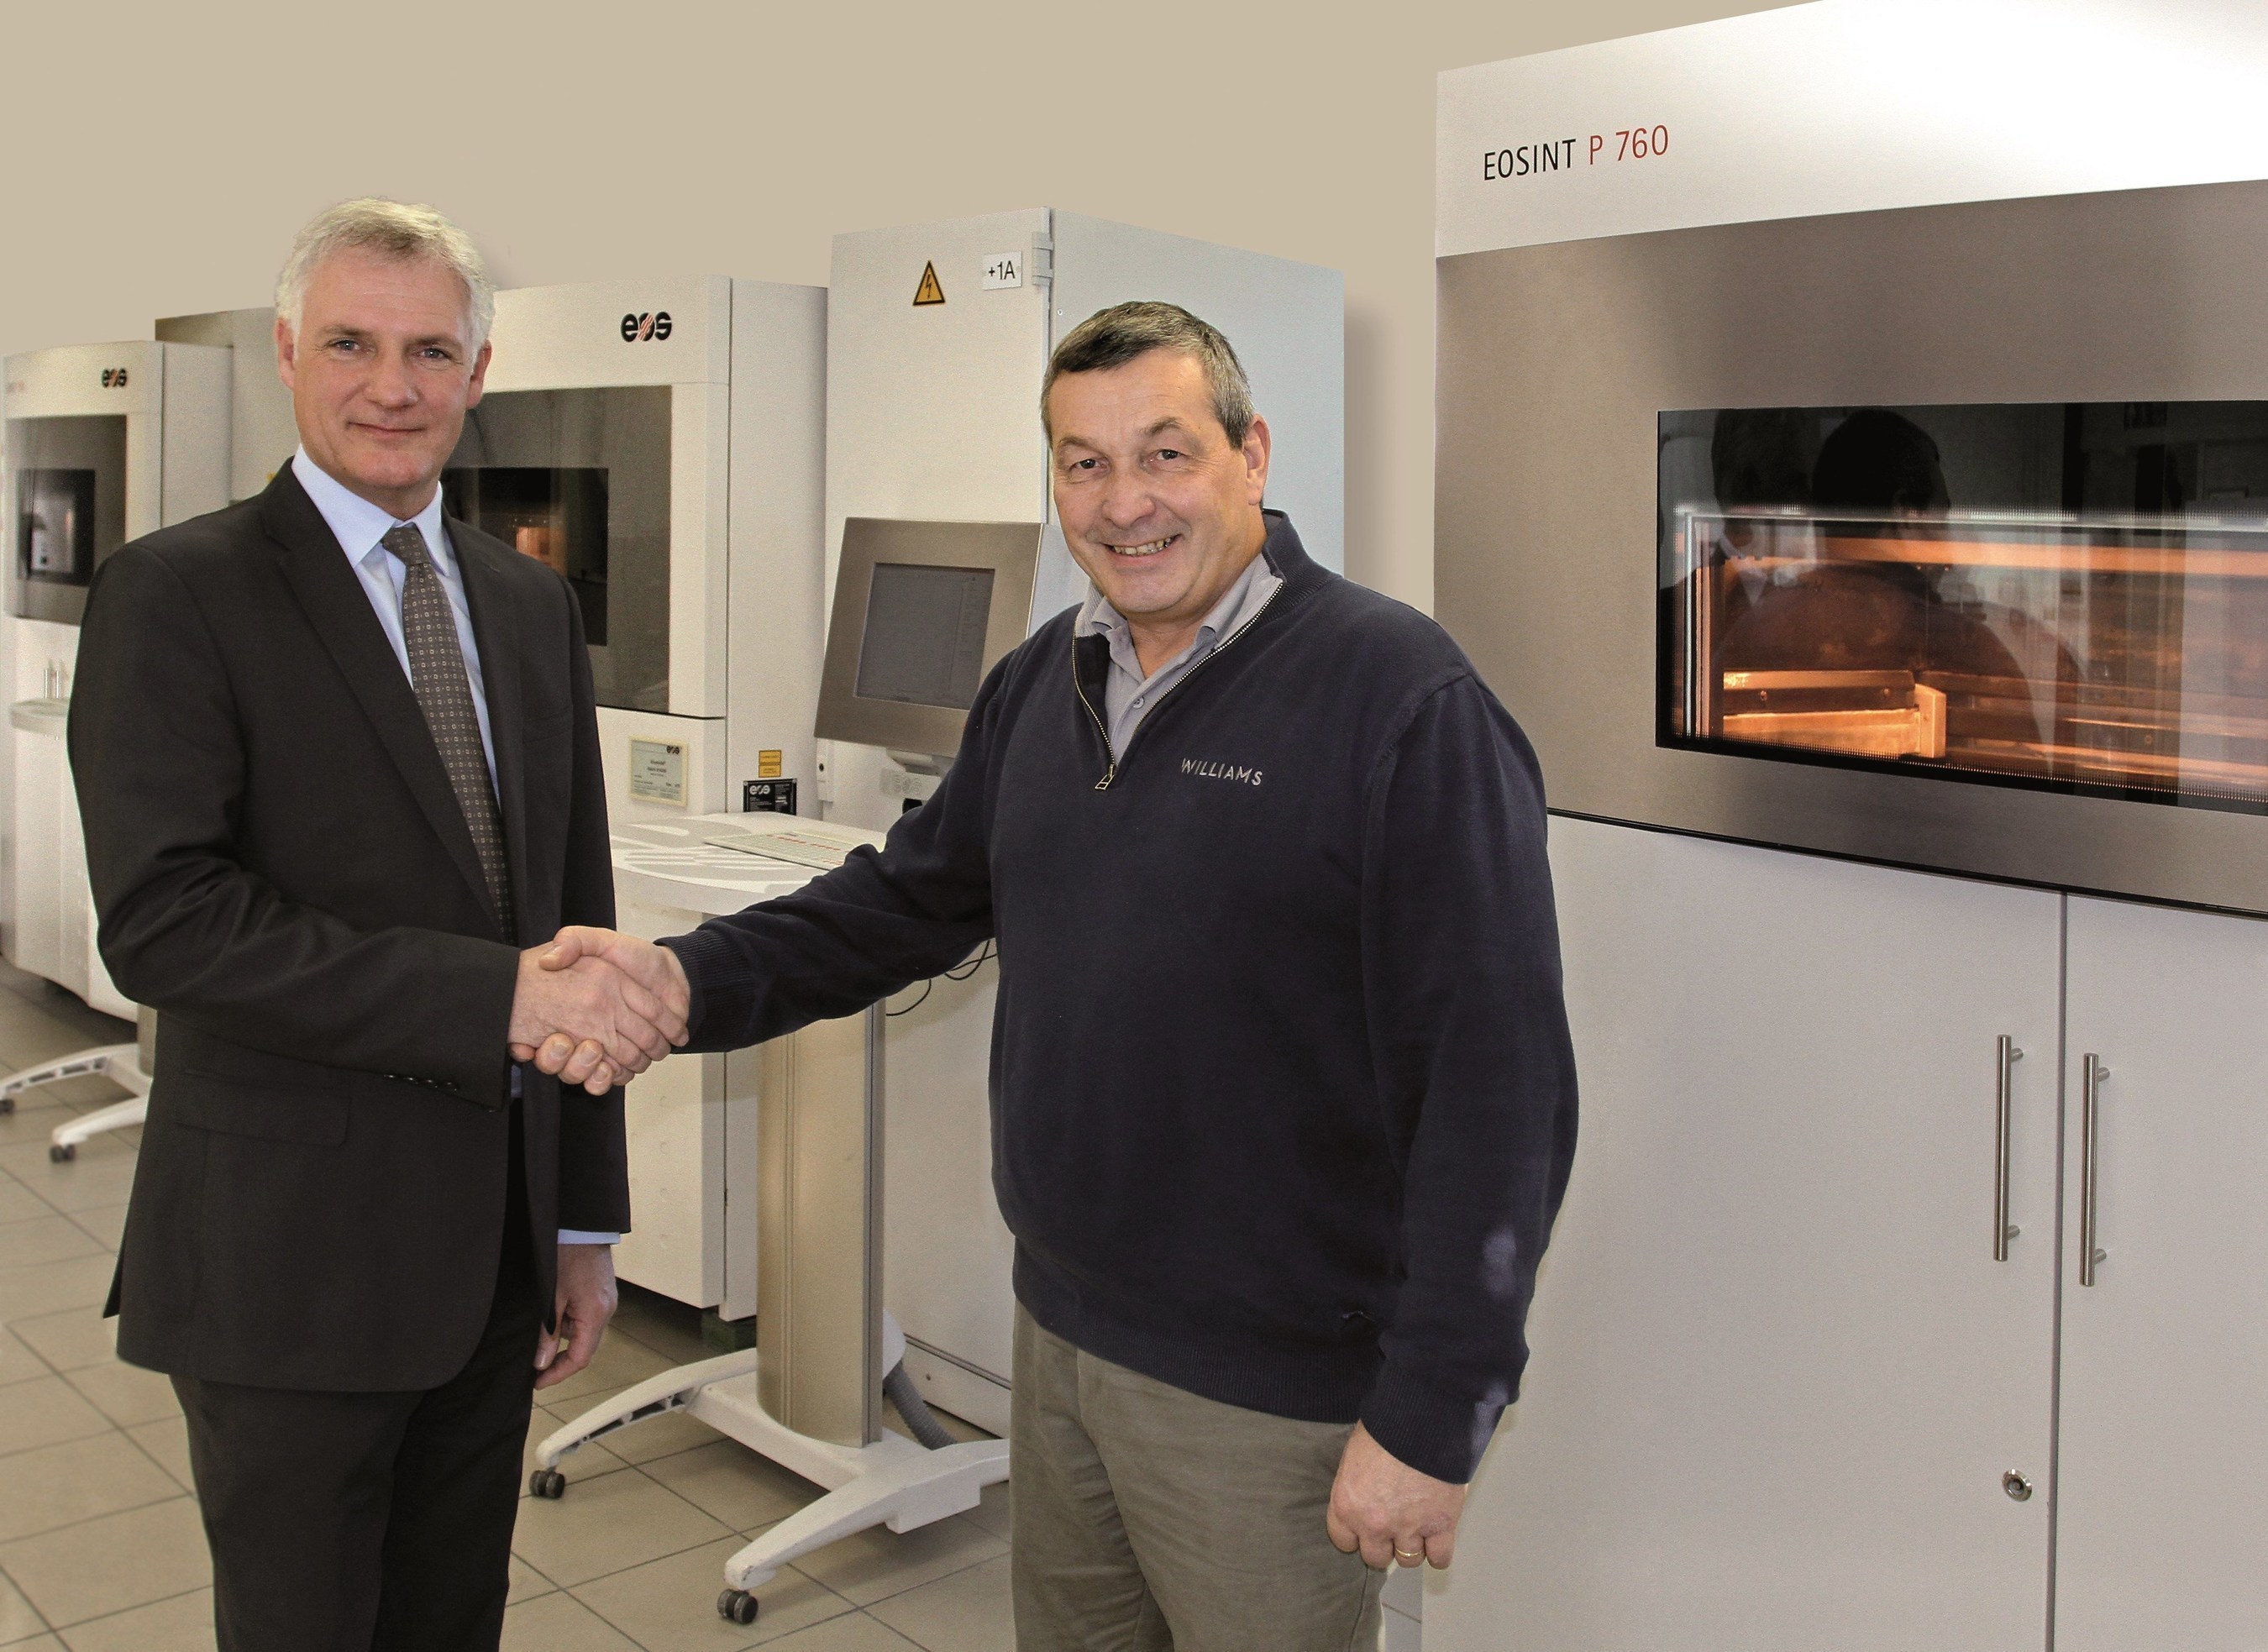 (f.l.t.r.) Stuart Jackson, Regional Manager EOS UK with Richard Brady, Advanced Digital Manufacturing Leader, in front of an EOSINT P 760 system (Source: EOS) (PRNewsFoto/EOS) (PRNewsFoto/EOS)